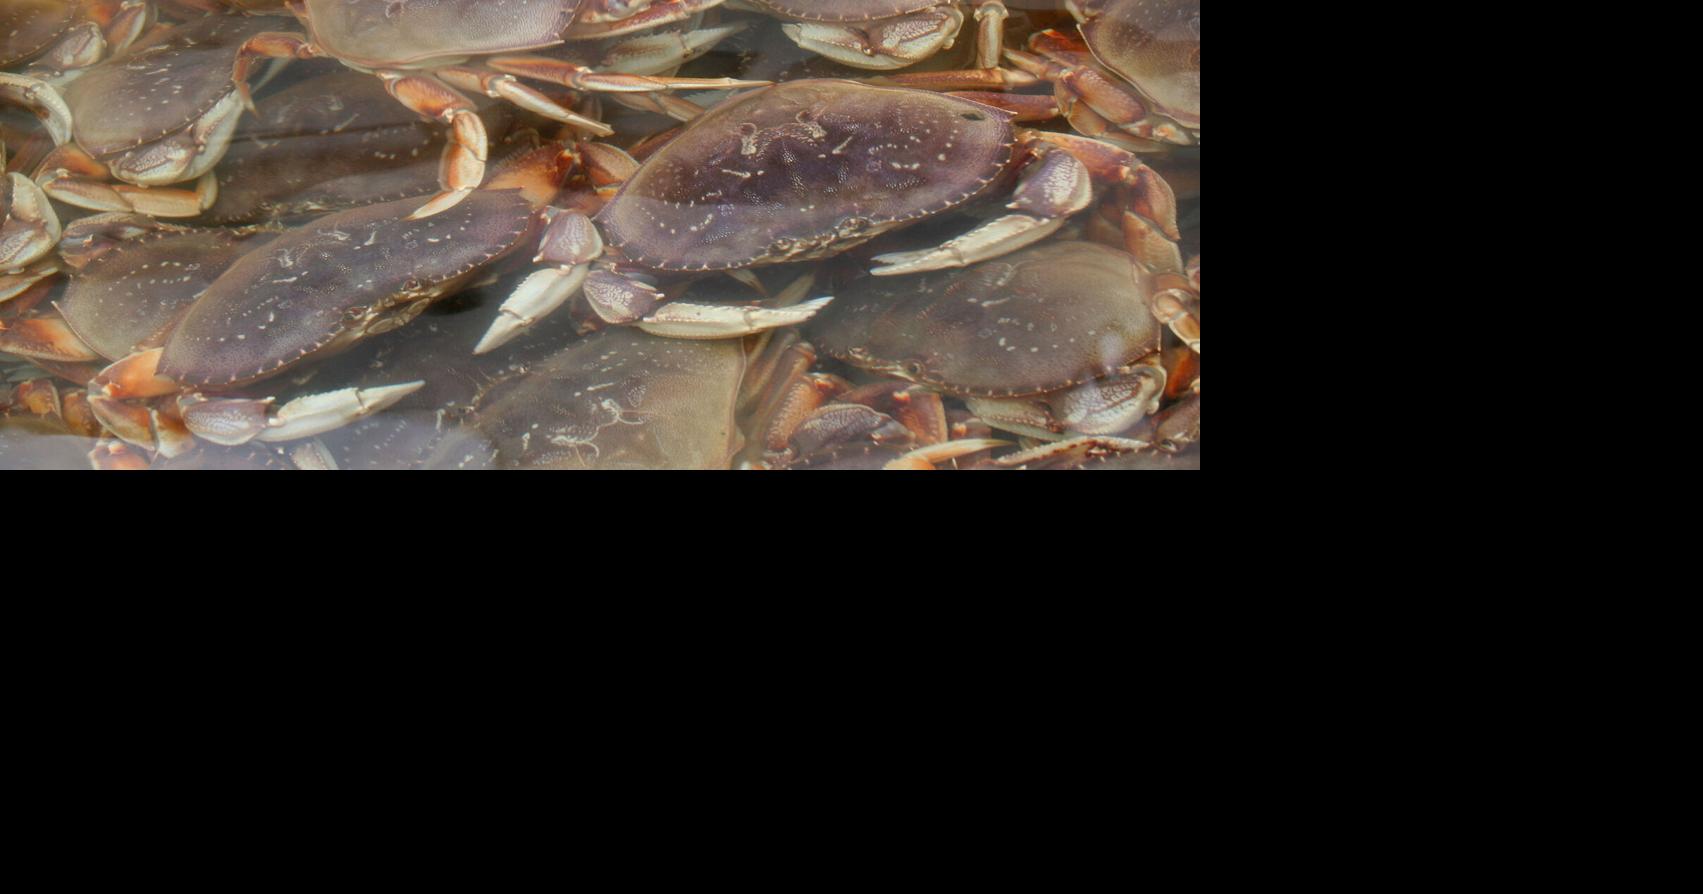 Recreational crabbing closed along the south Oregon Coast, News